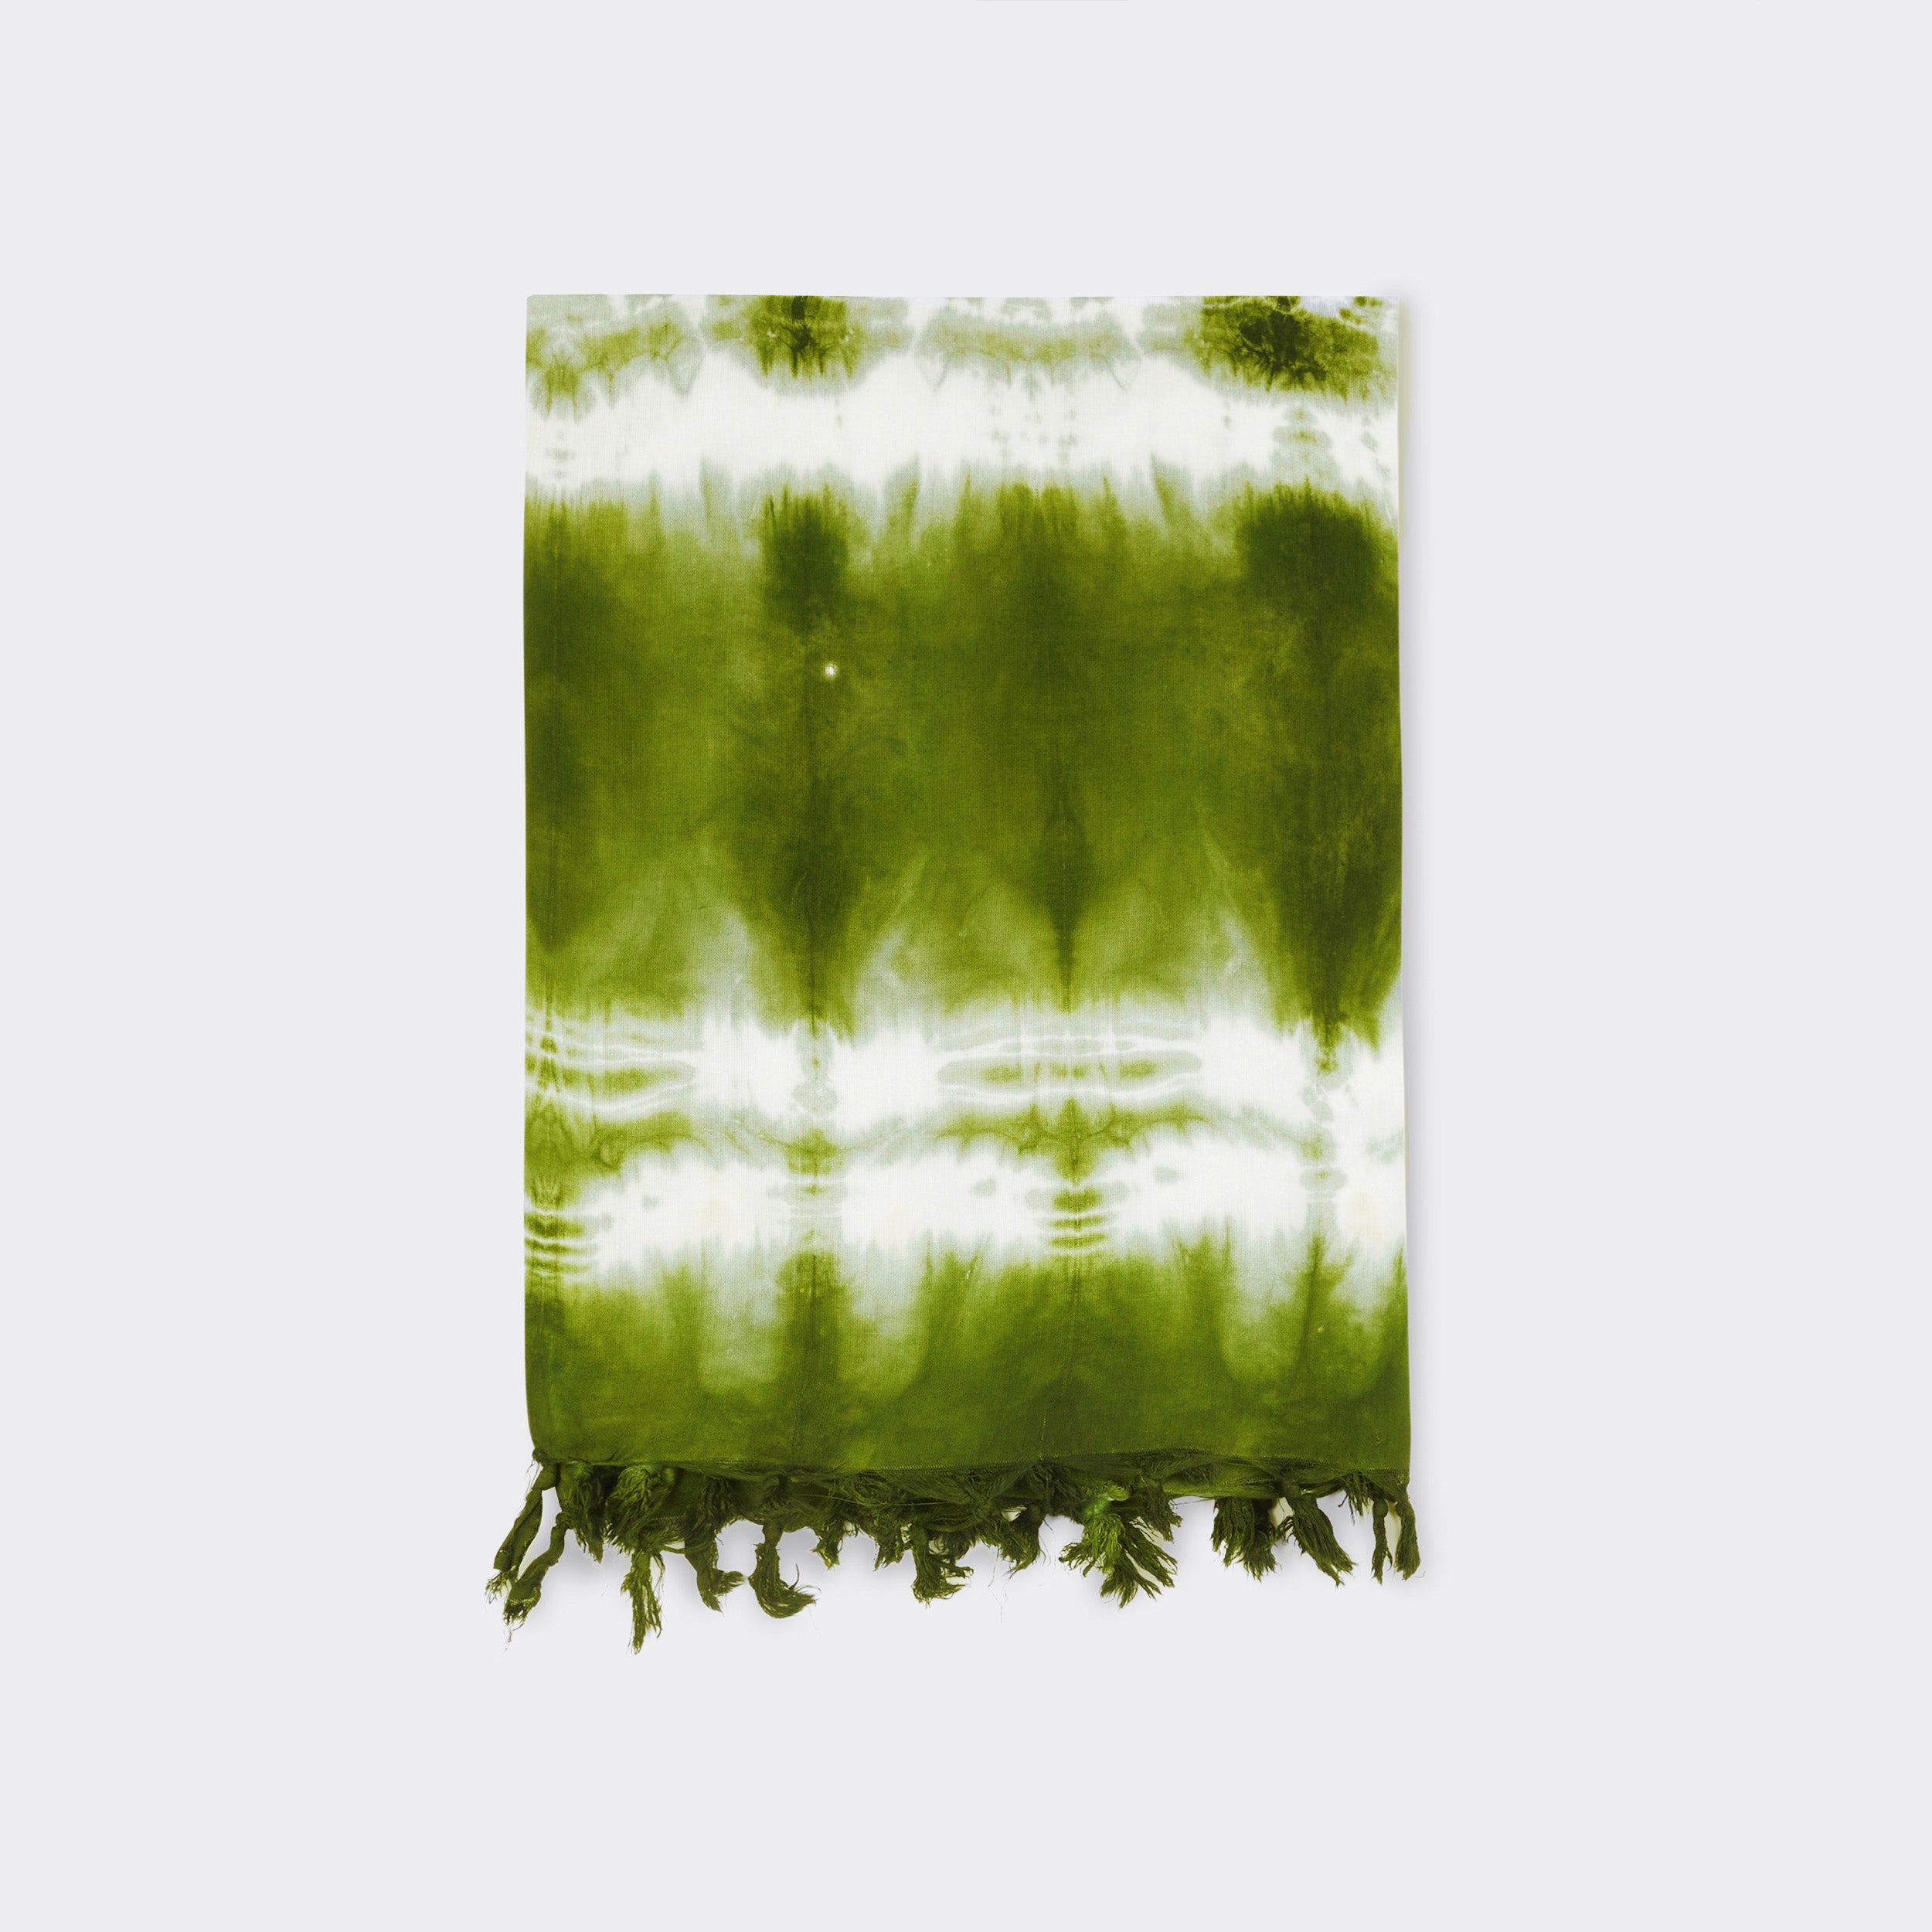 Still life: Pareo in Tie Dye Intense Green.